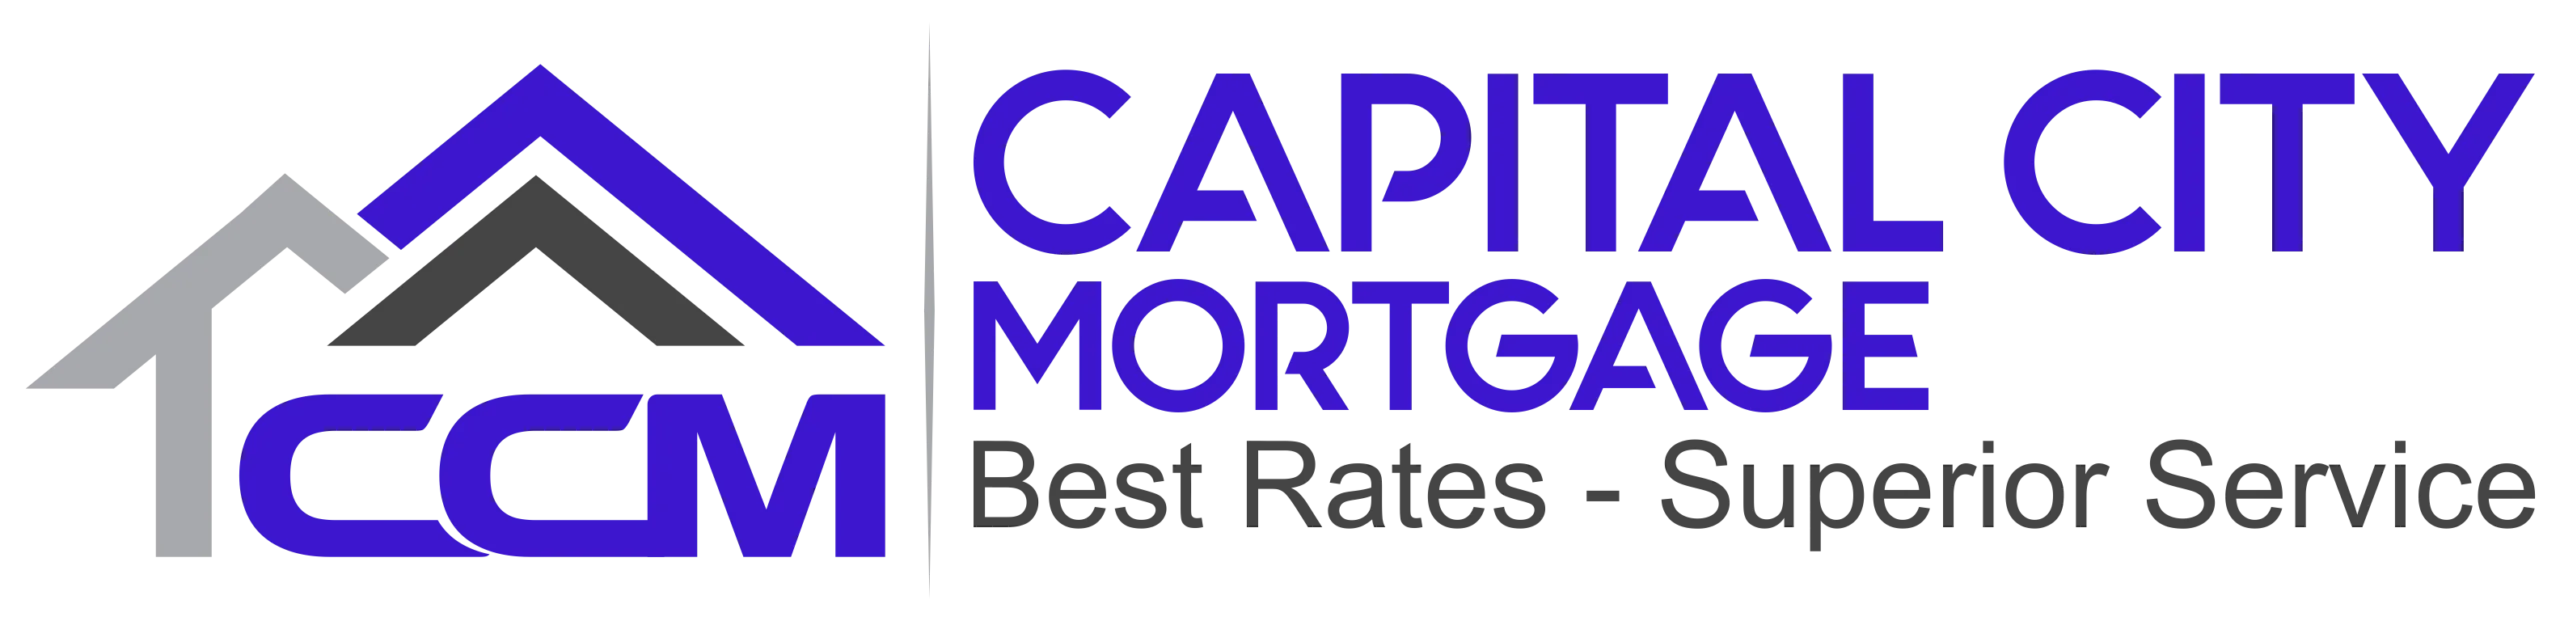 Capital City Mortgage